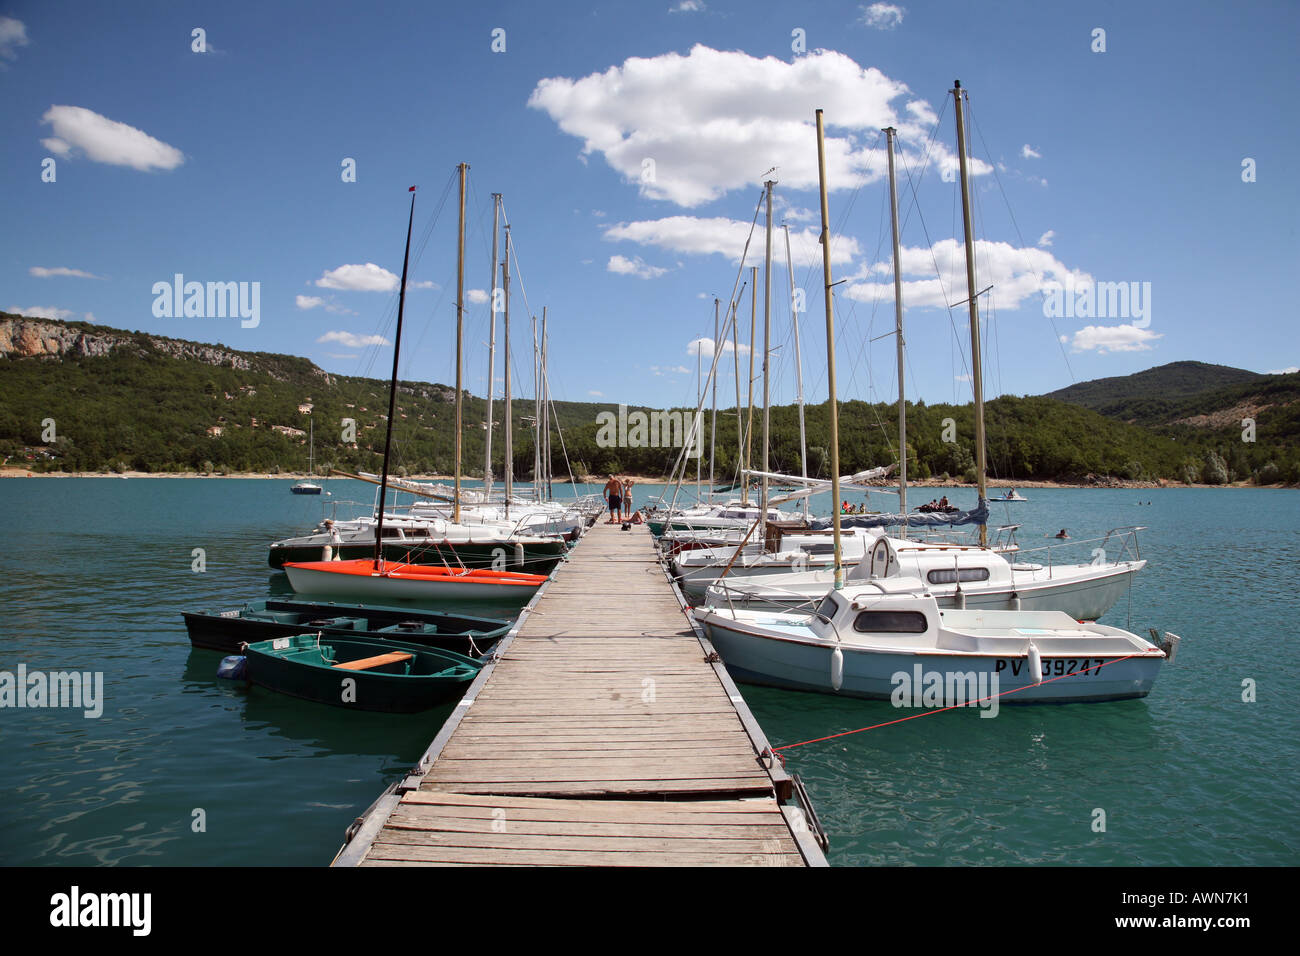 Boote vertäut am Rande der See, Lac de Sainte Croix, Cote d ' Azur, Frankreich Europa Stockfoto